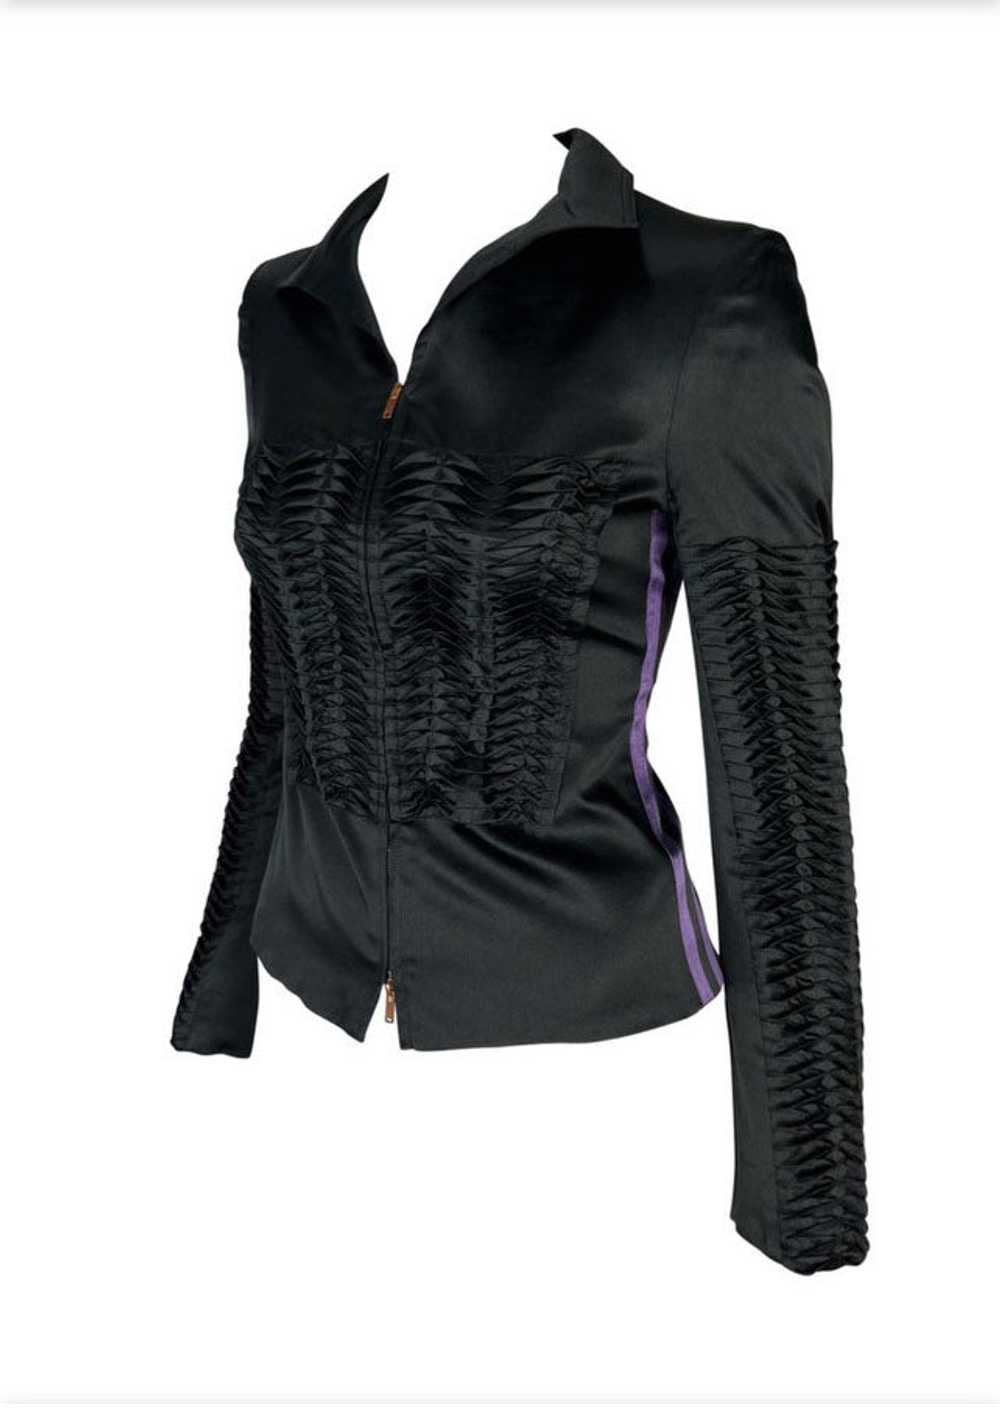 S/S 2004 GUCCI jacket corset - image 4